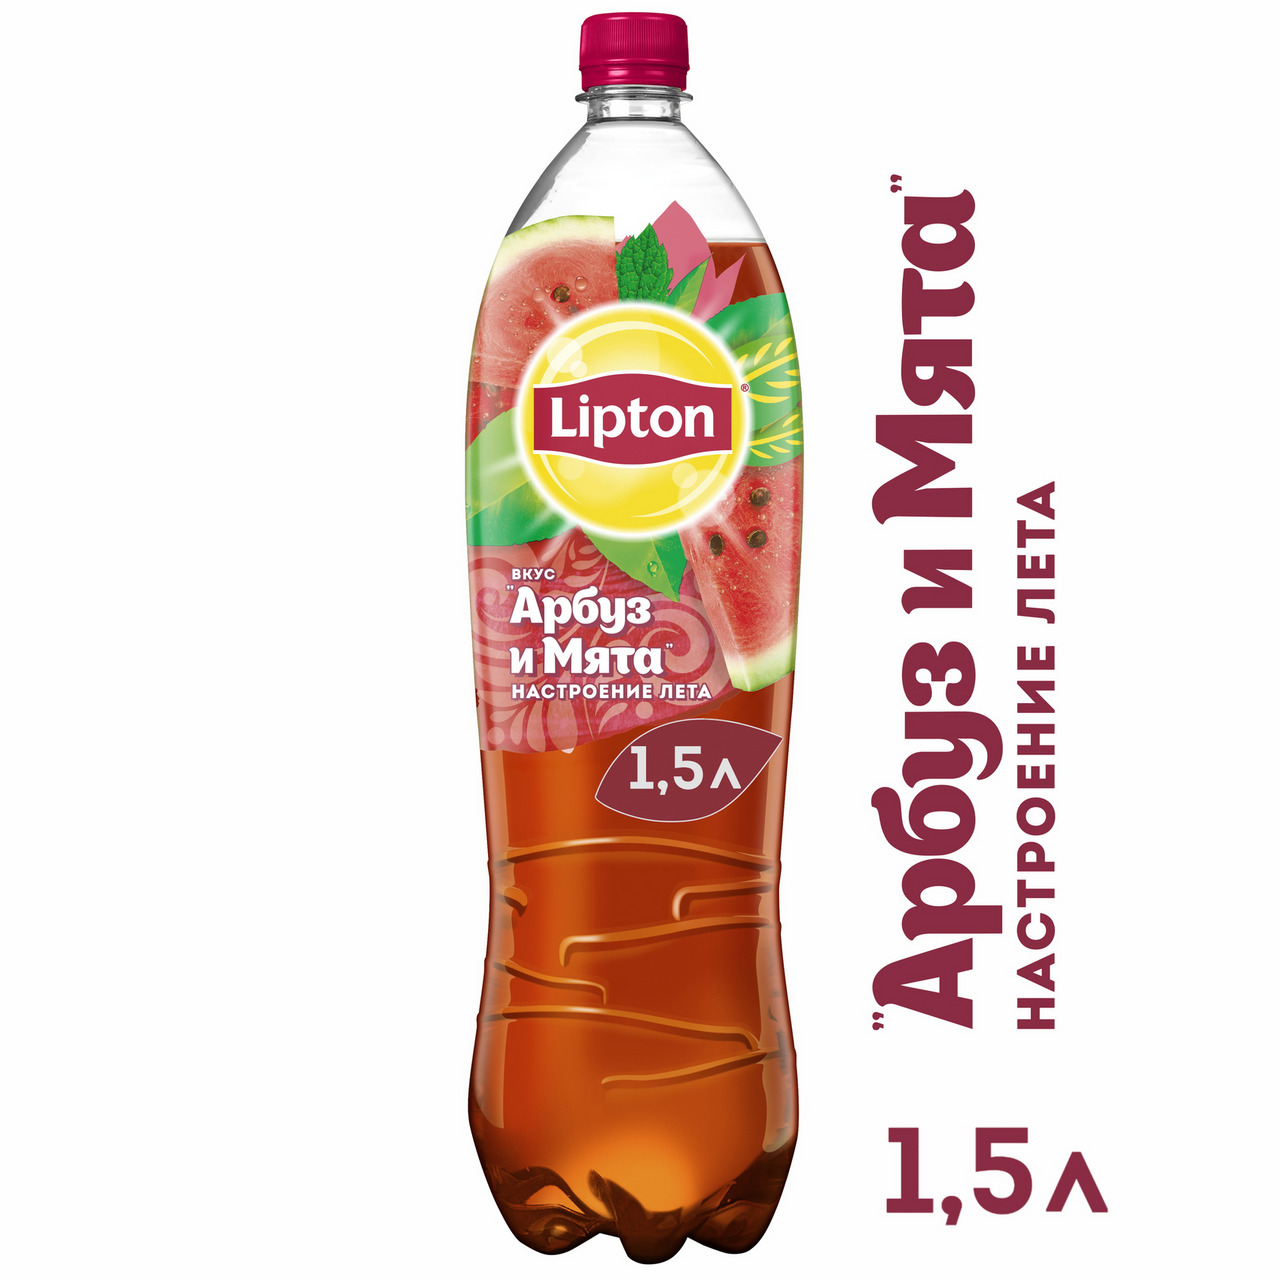 Липтон 1.5. Липтон 2022 1.5л. Липтон холодный чай 1.5 л. Чай Липтон 1.5. Липтон зелёный холодный чай 1.5.